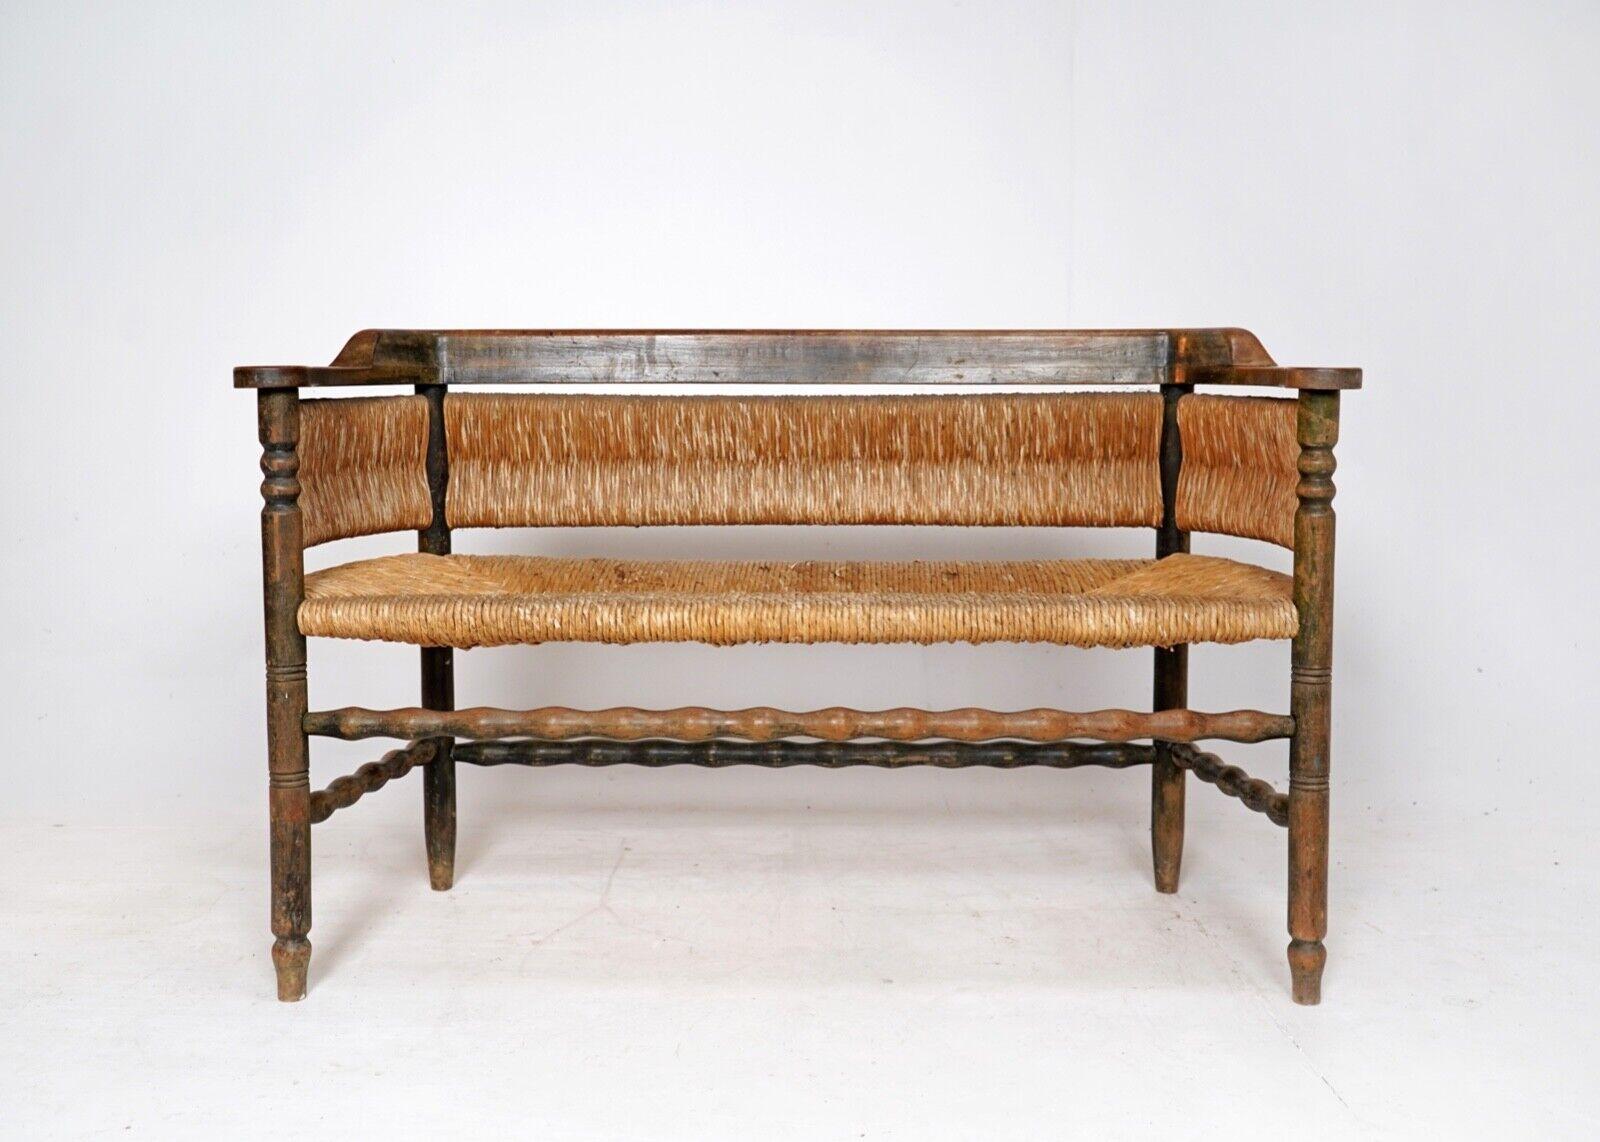 20th Century French Wooden Rush Seat Bobbin 3 Seater Bench